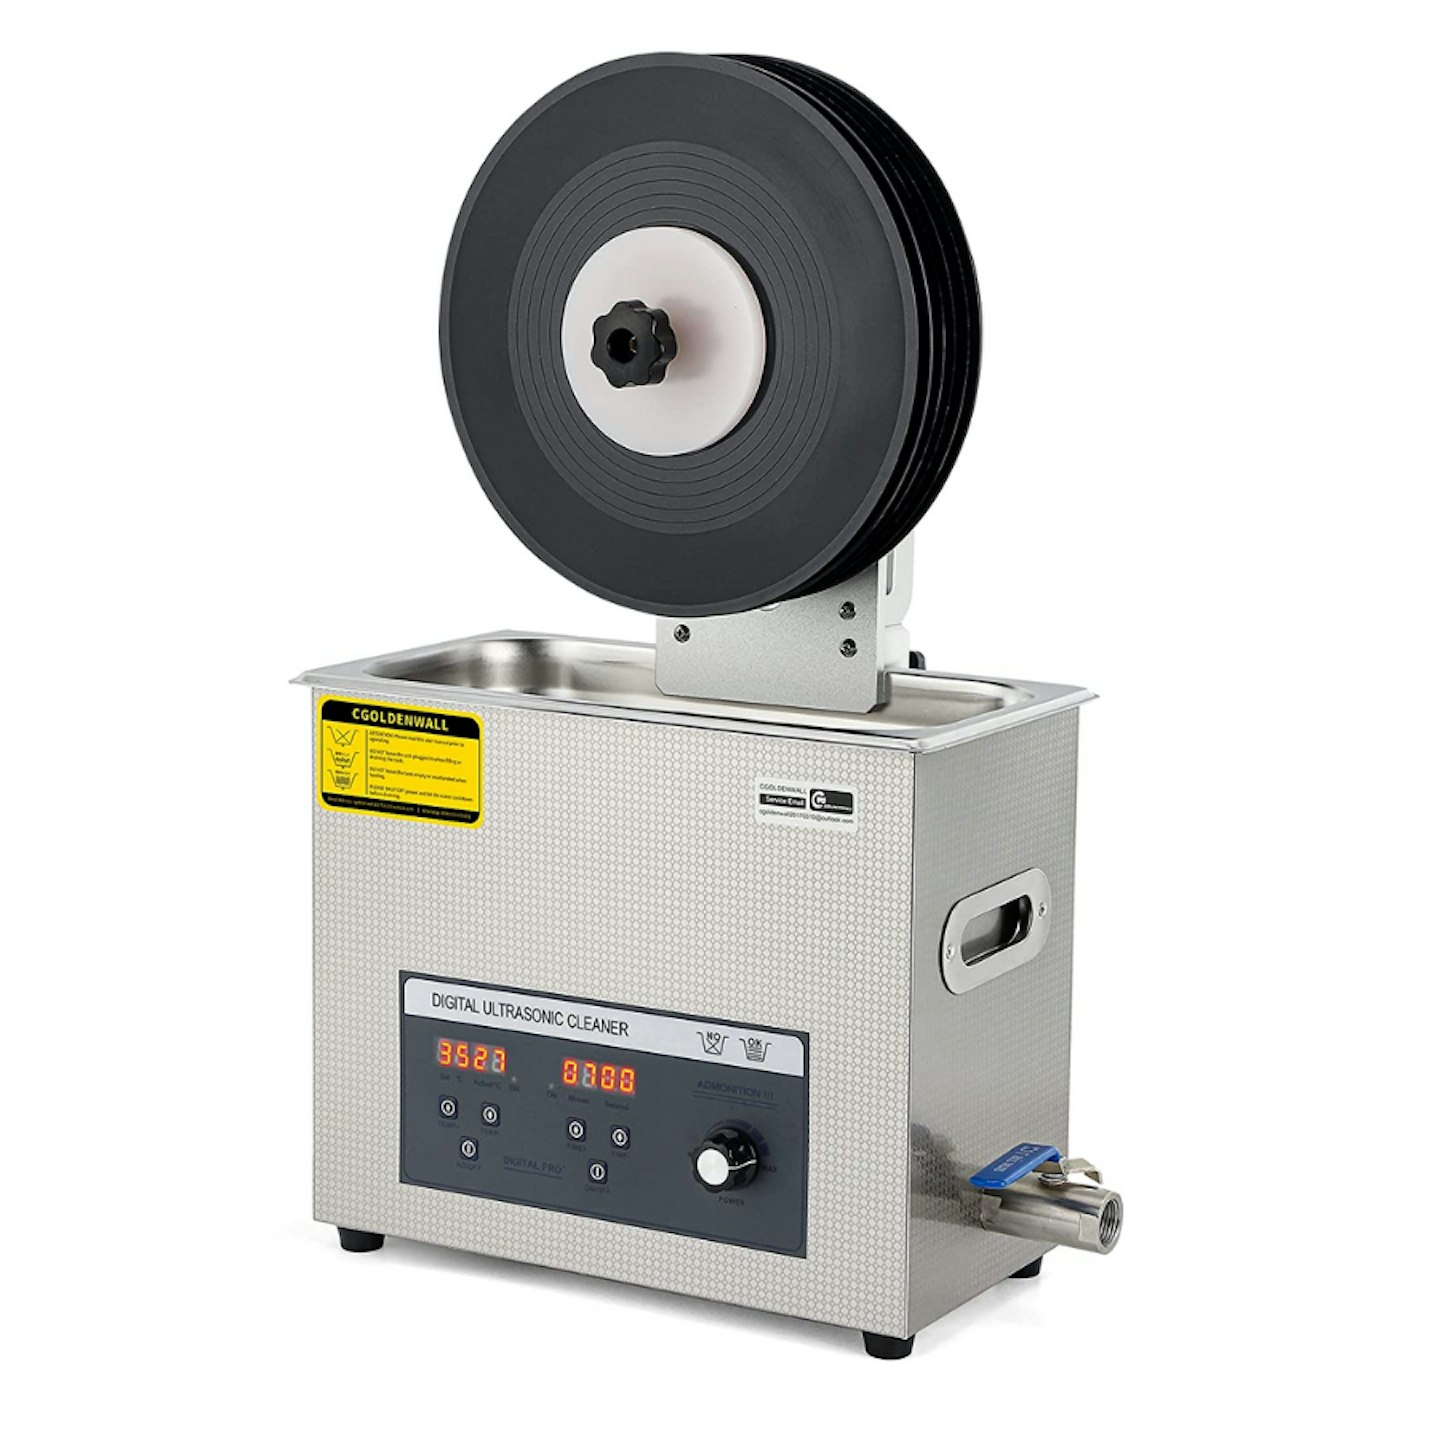 CGoldenwall 6L Vinyl Record Ultrasonic Cleaner Digital Type 70